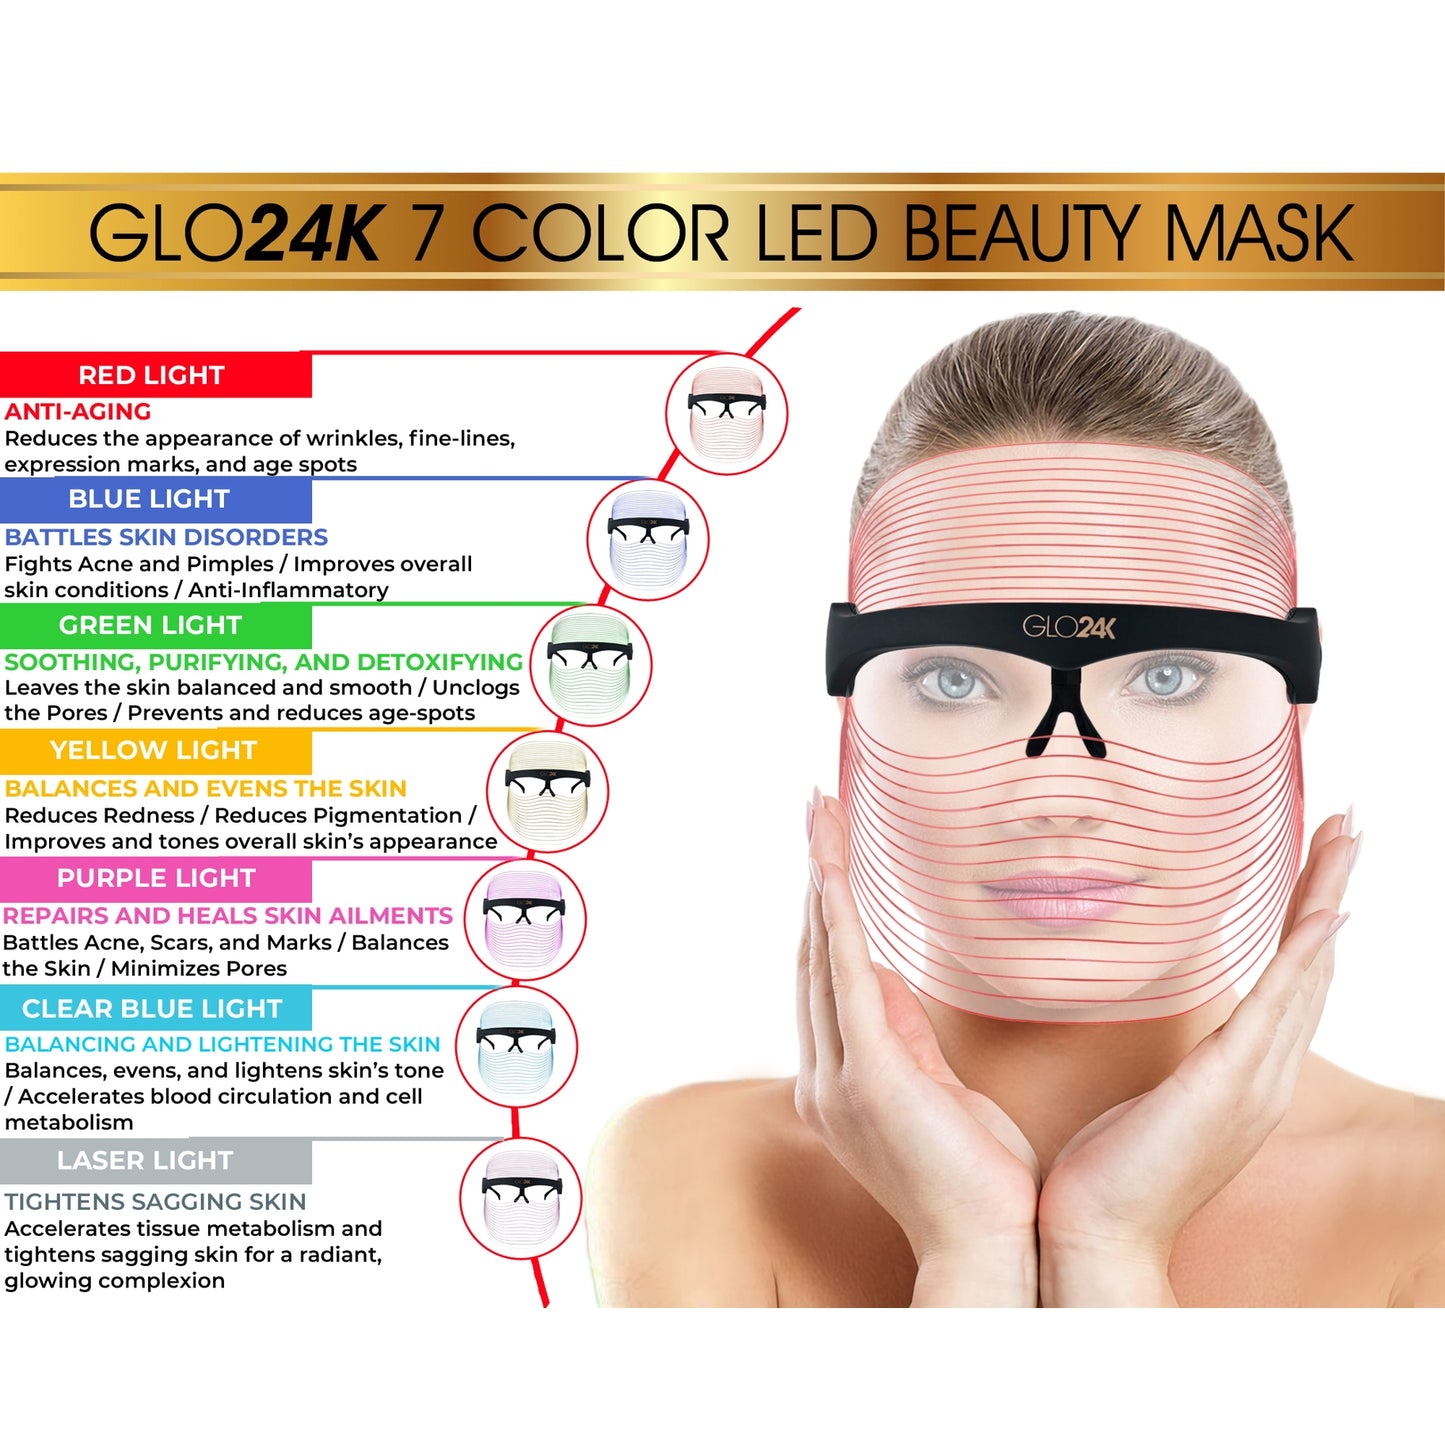 7 Color Led Beauty Mask